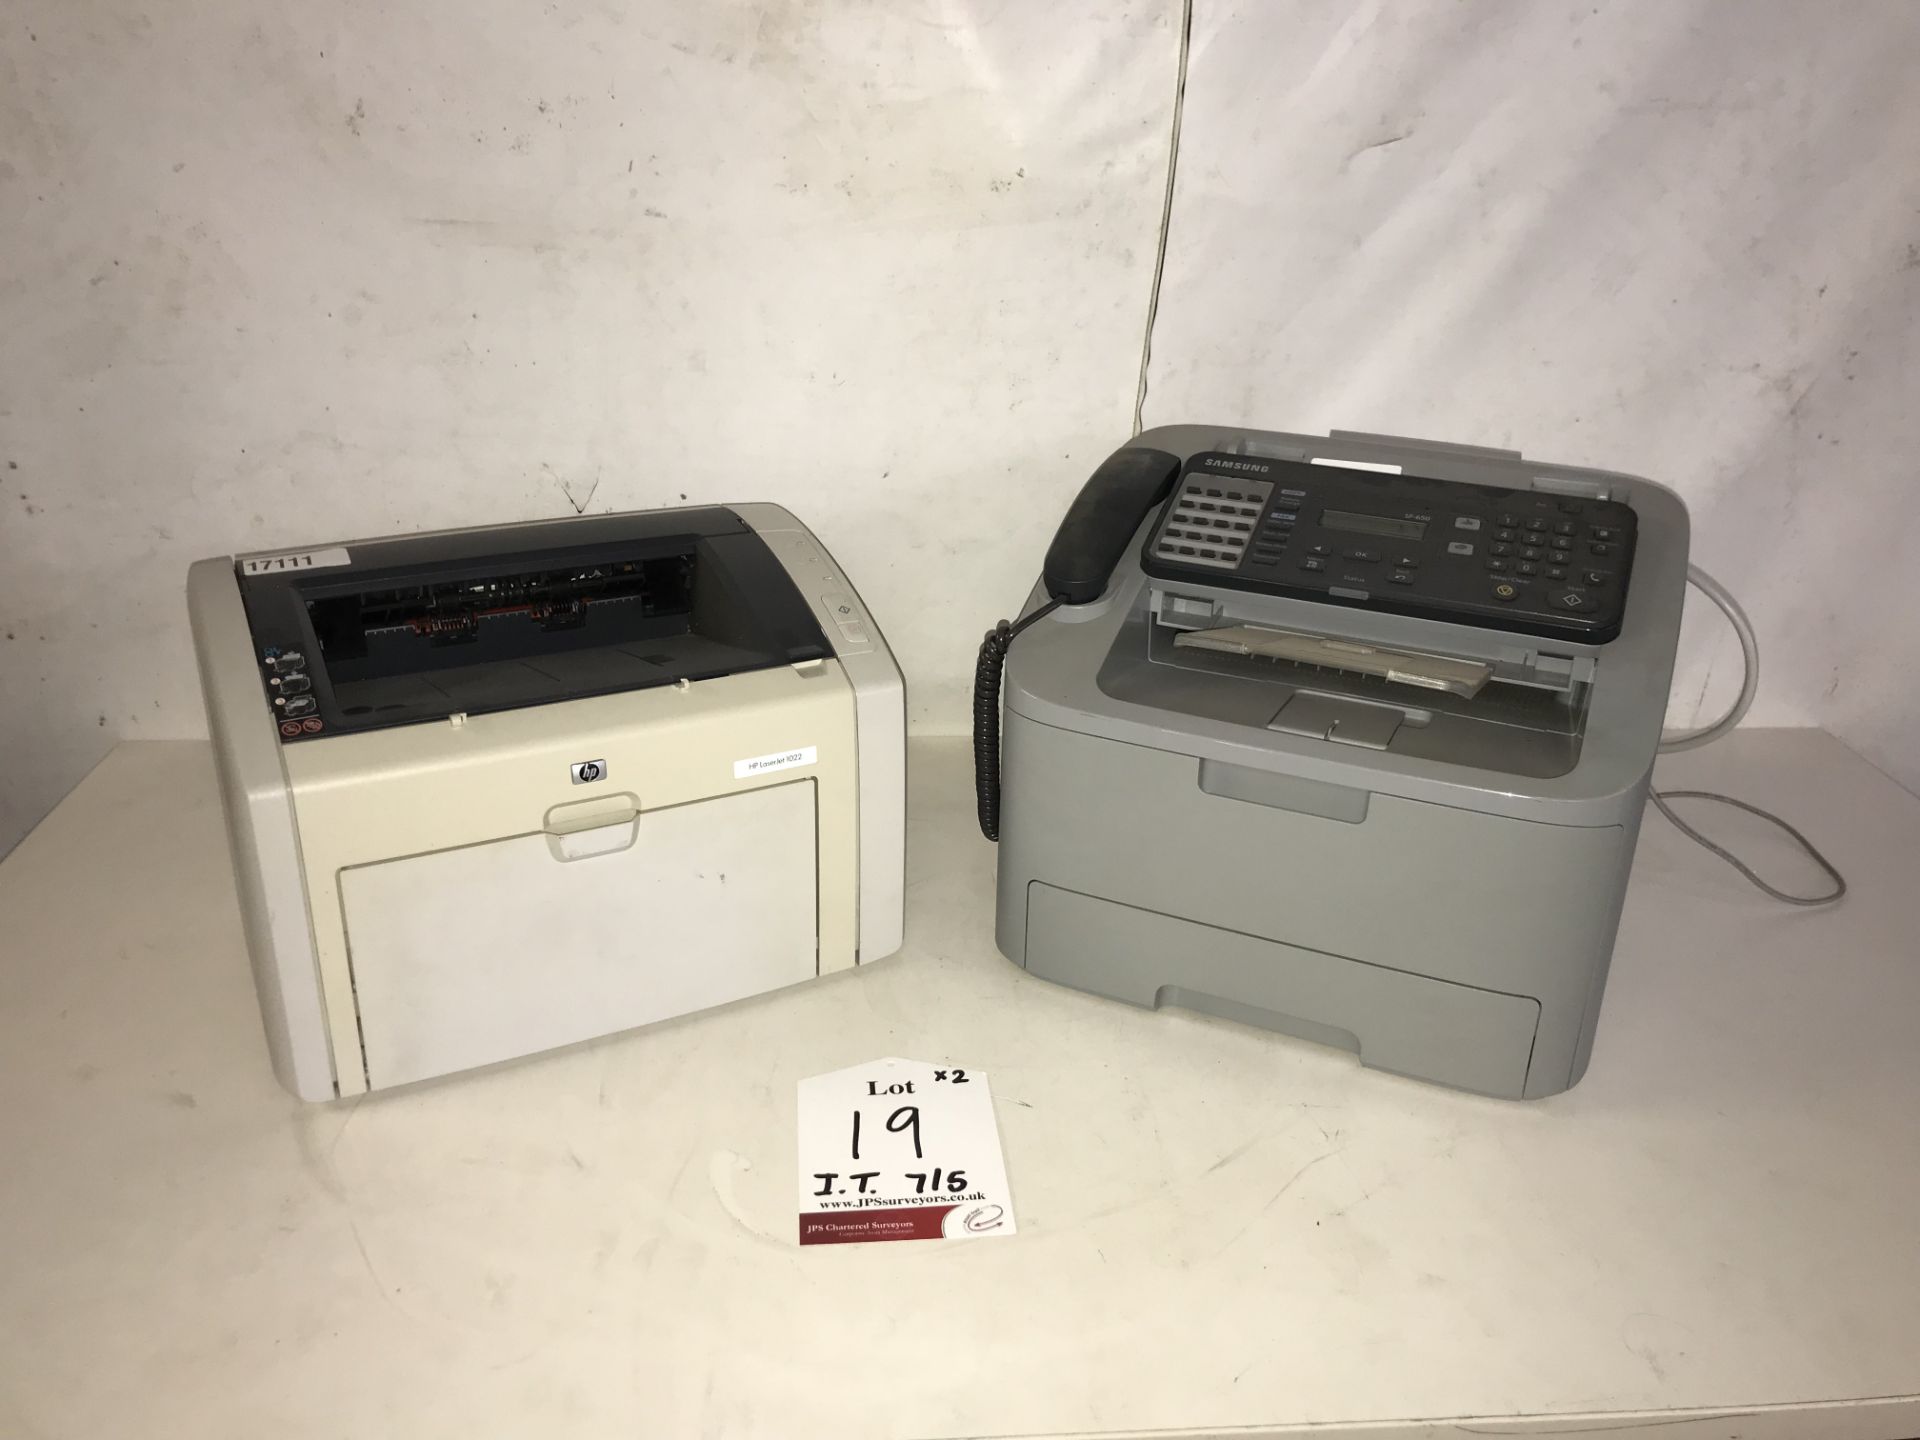 Samsung SF-650 Fax machine & HP 1022 Laserjet Printer